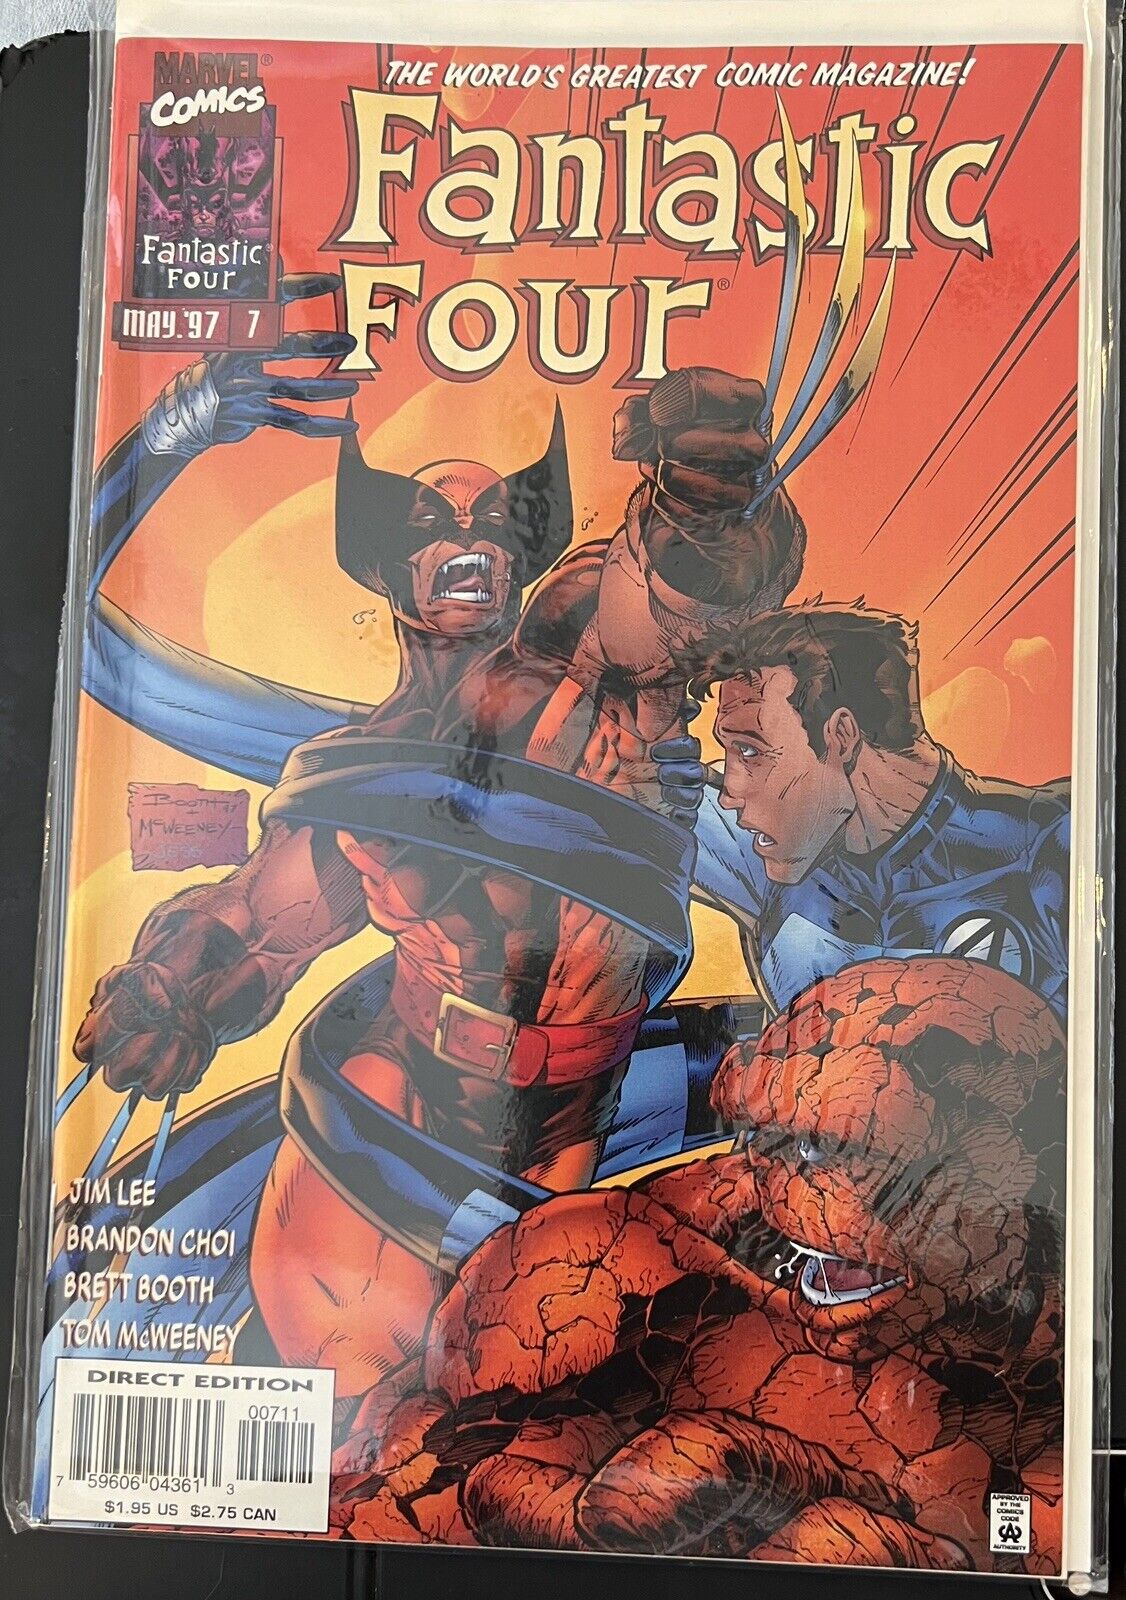 Fantastic Four #7 (May 1997, Marvel) - Near Mint